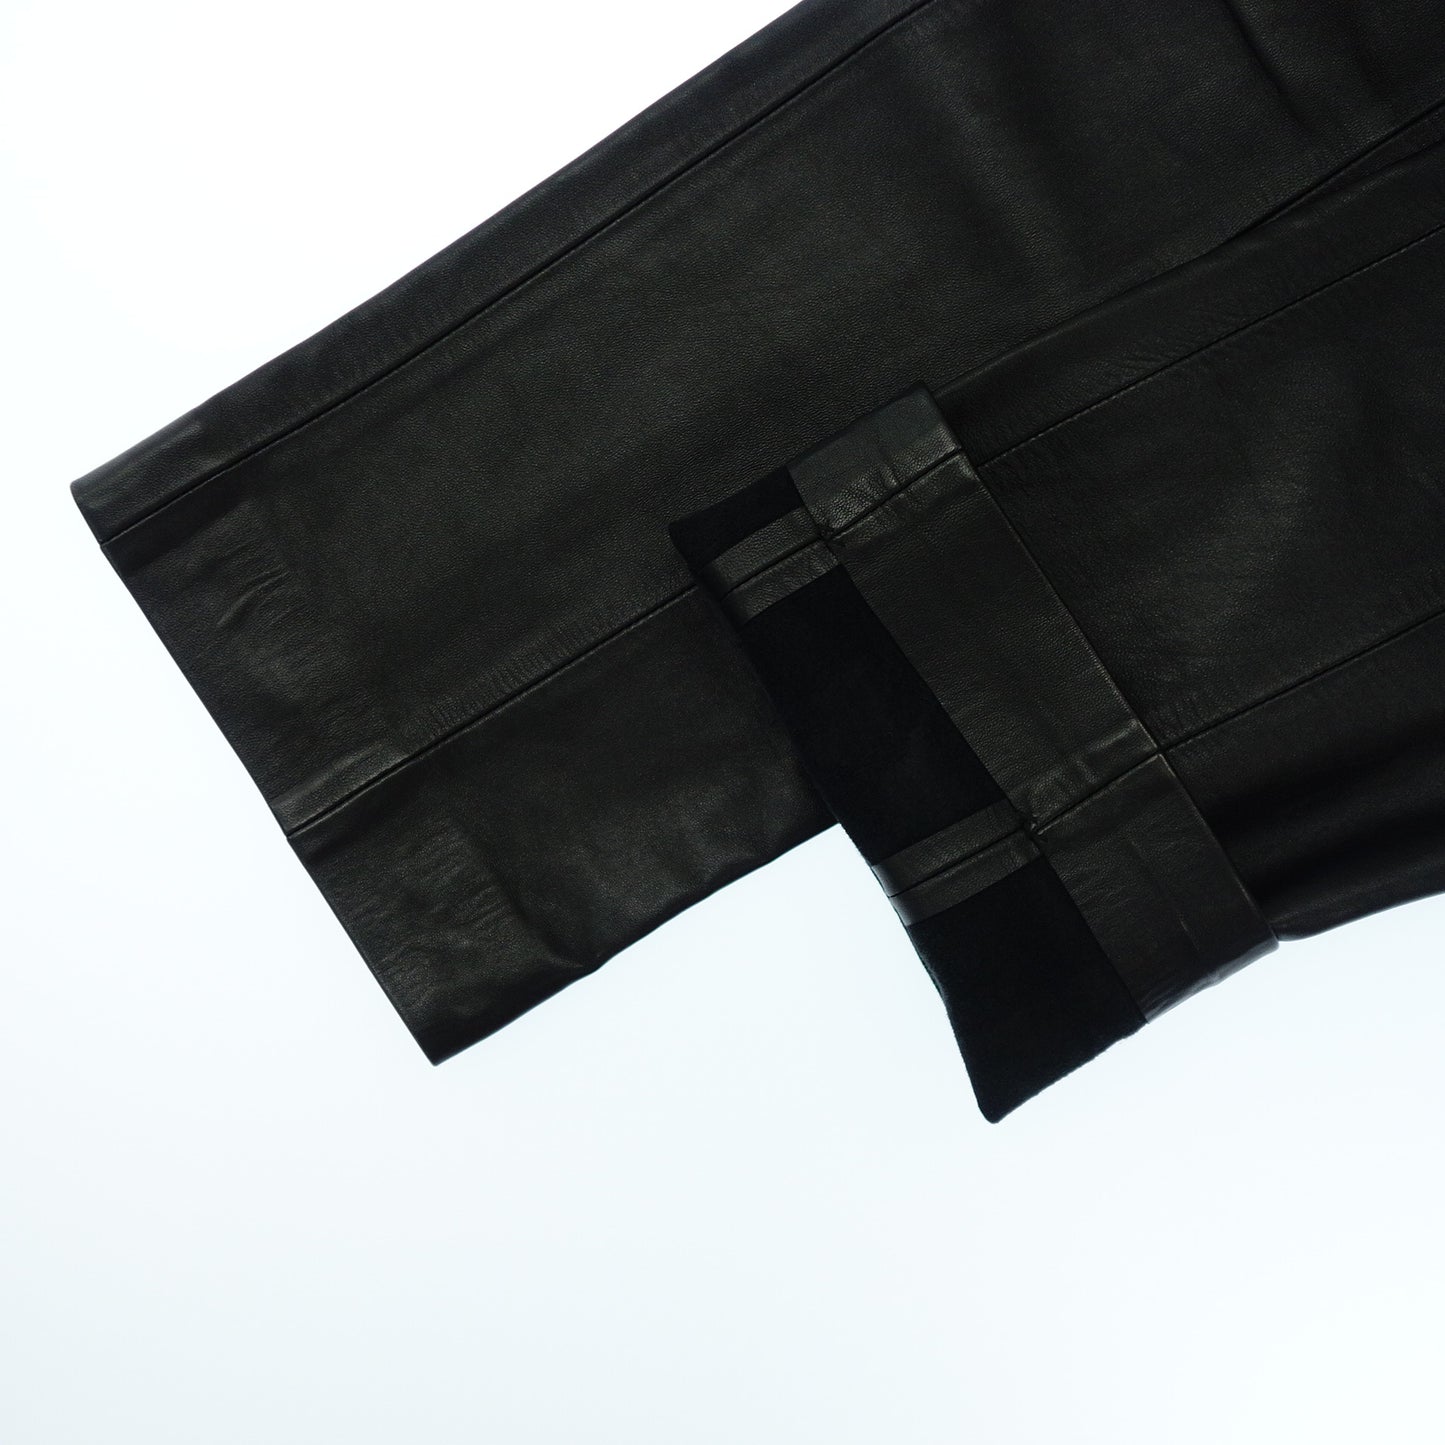 Loewe Leather Pants Lamb Leather Women's [AFB5] 